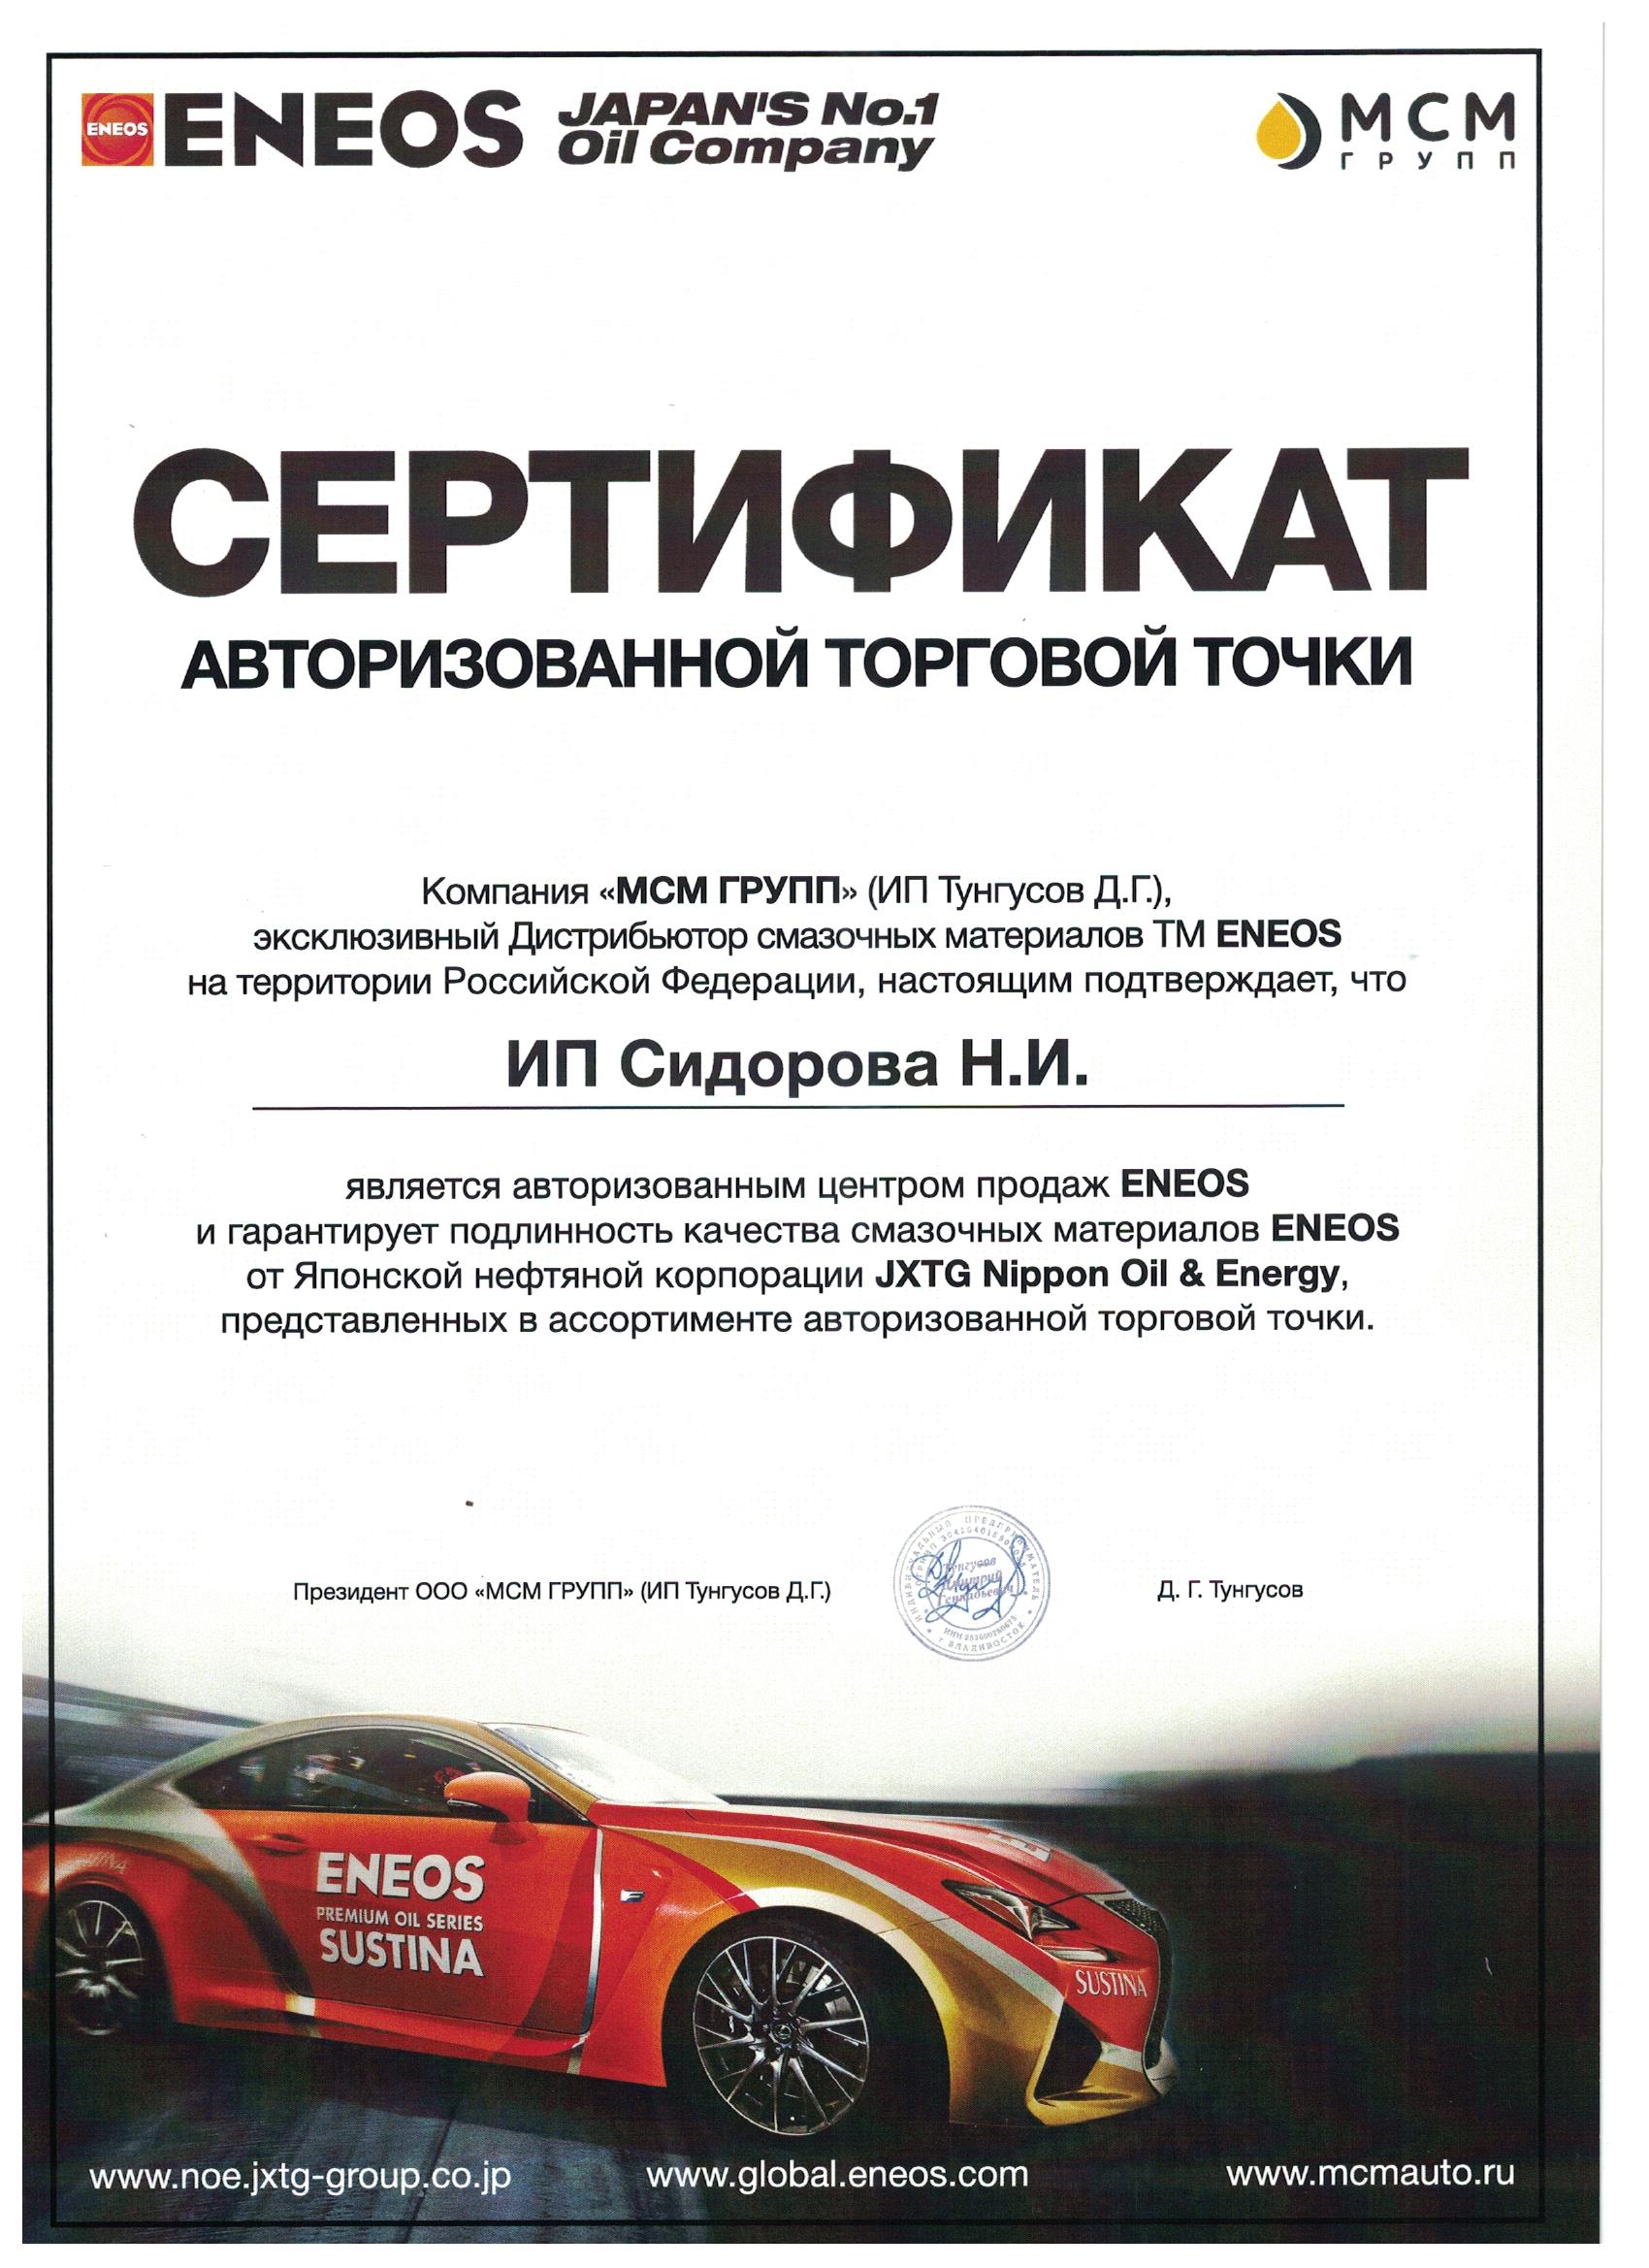 сертификат eneos